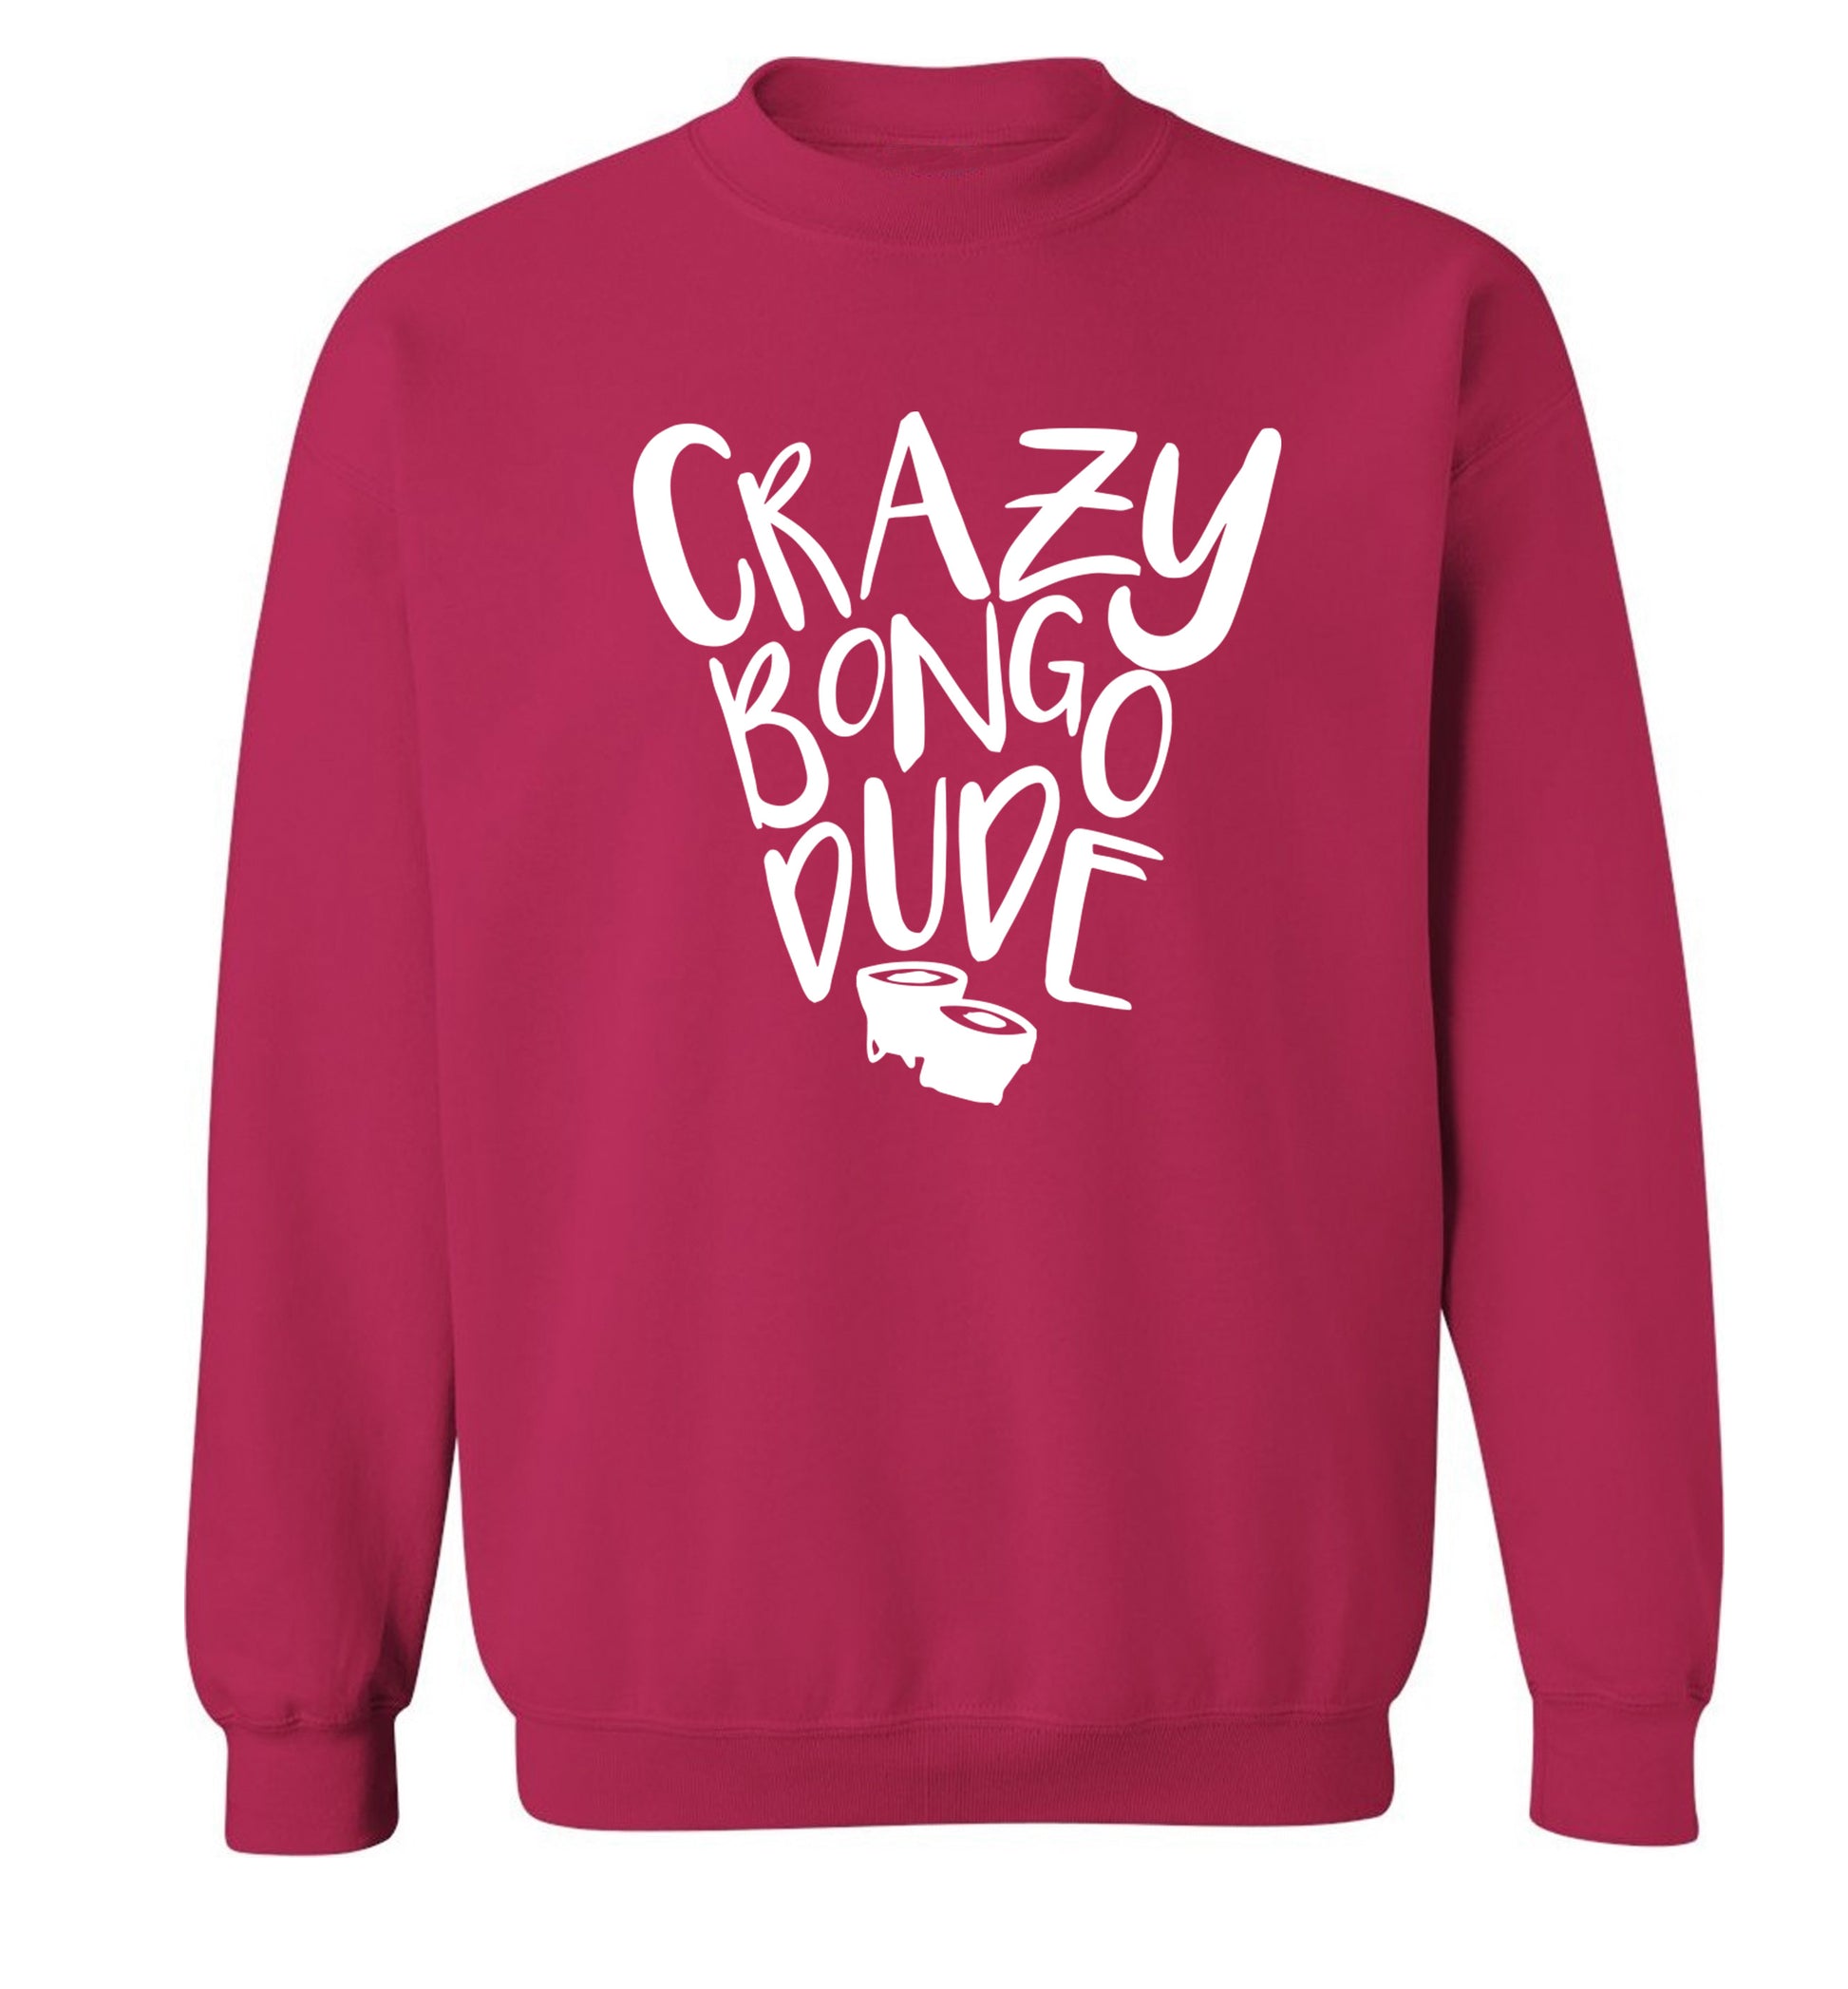 Crazy bongo dude Adult's unisex pink Sweater 2XL